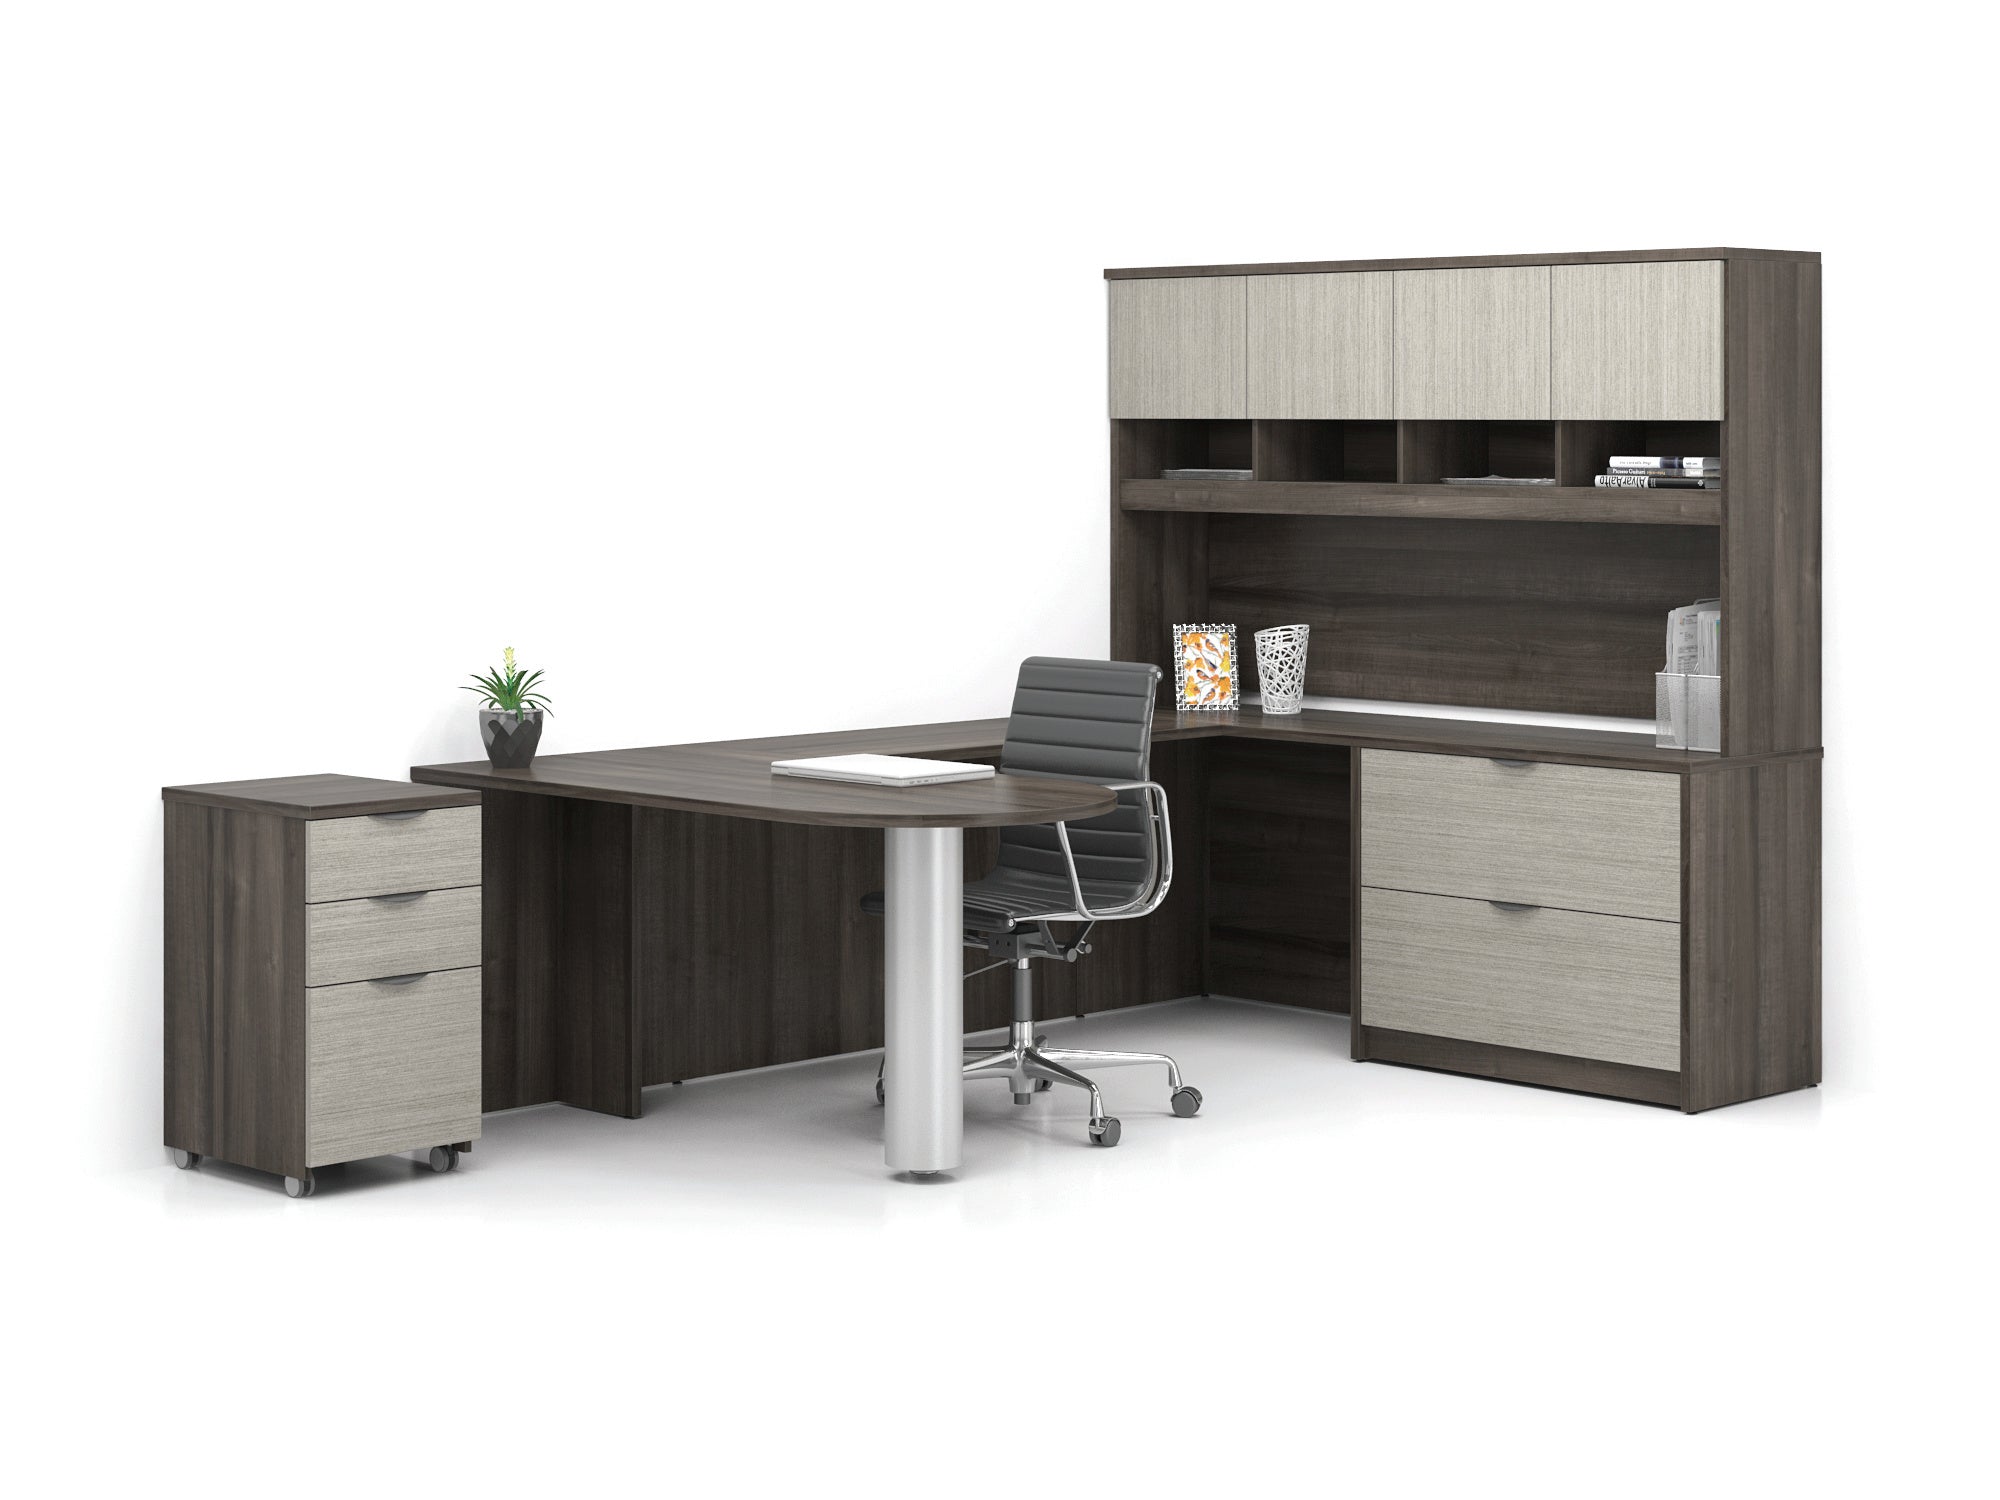 CA5020U-2 - Economy Peninsula U Shaped Desk by Candex